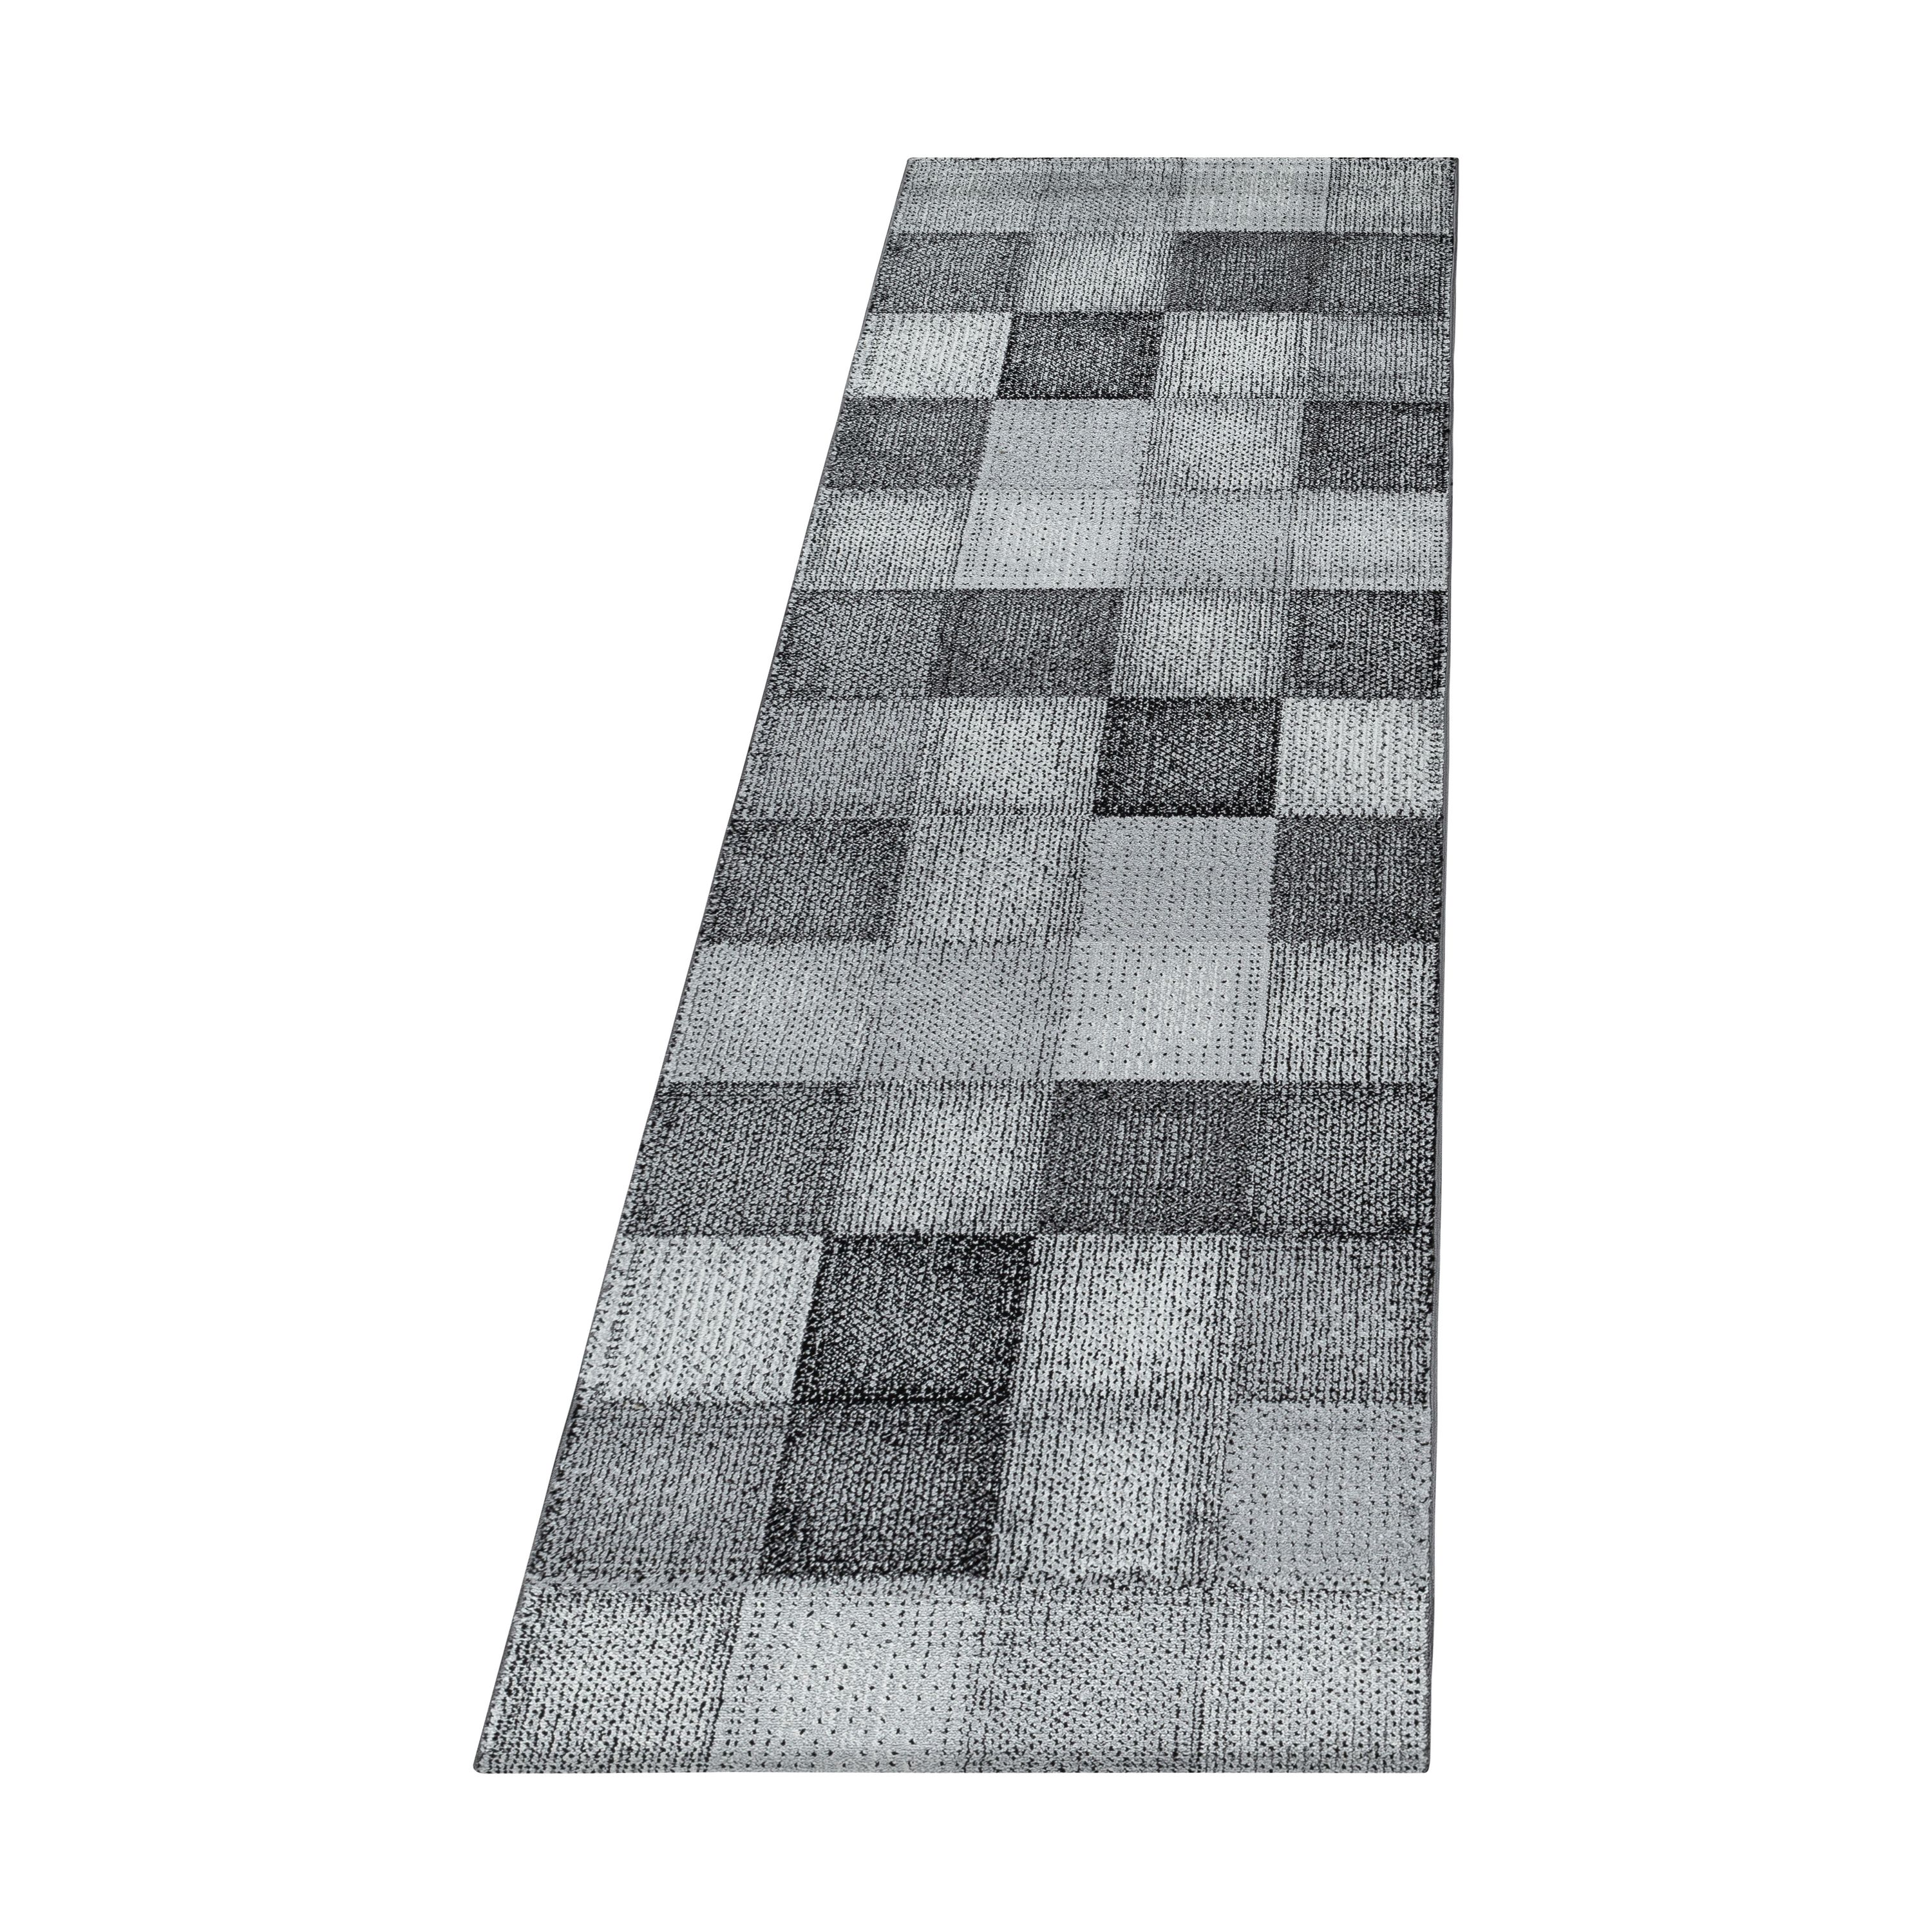 Kurzflor Teppich Bettset Grau Quadrat Pixel Muster Läuferset 3 Teile Weich